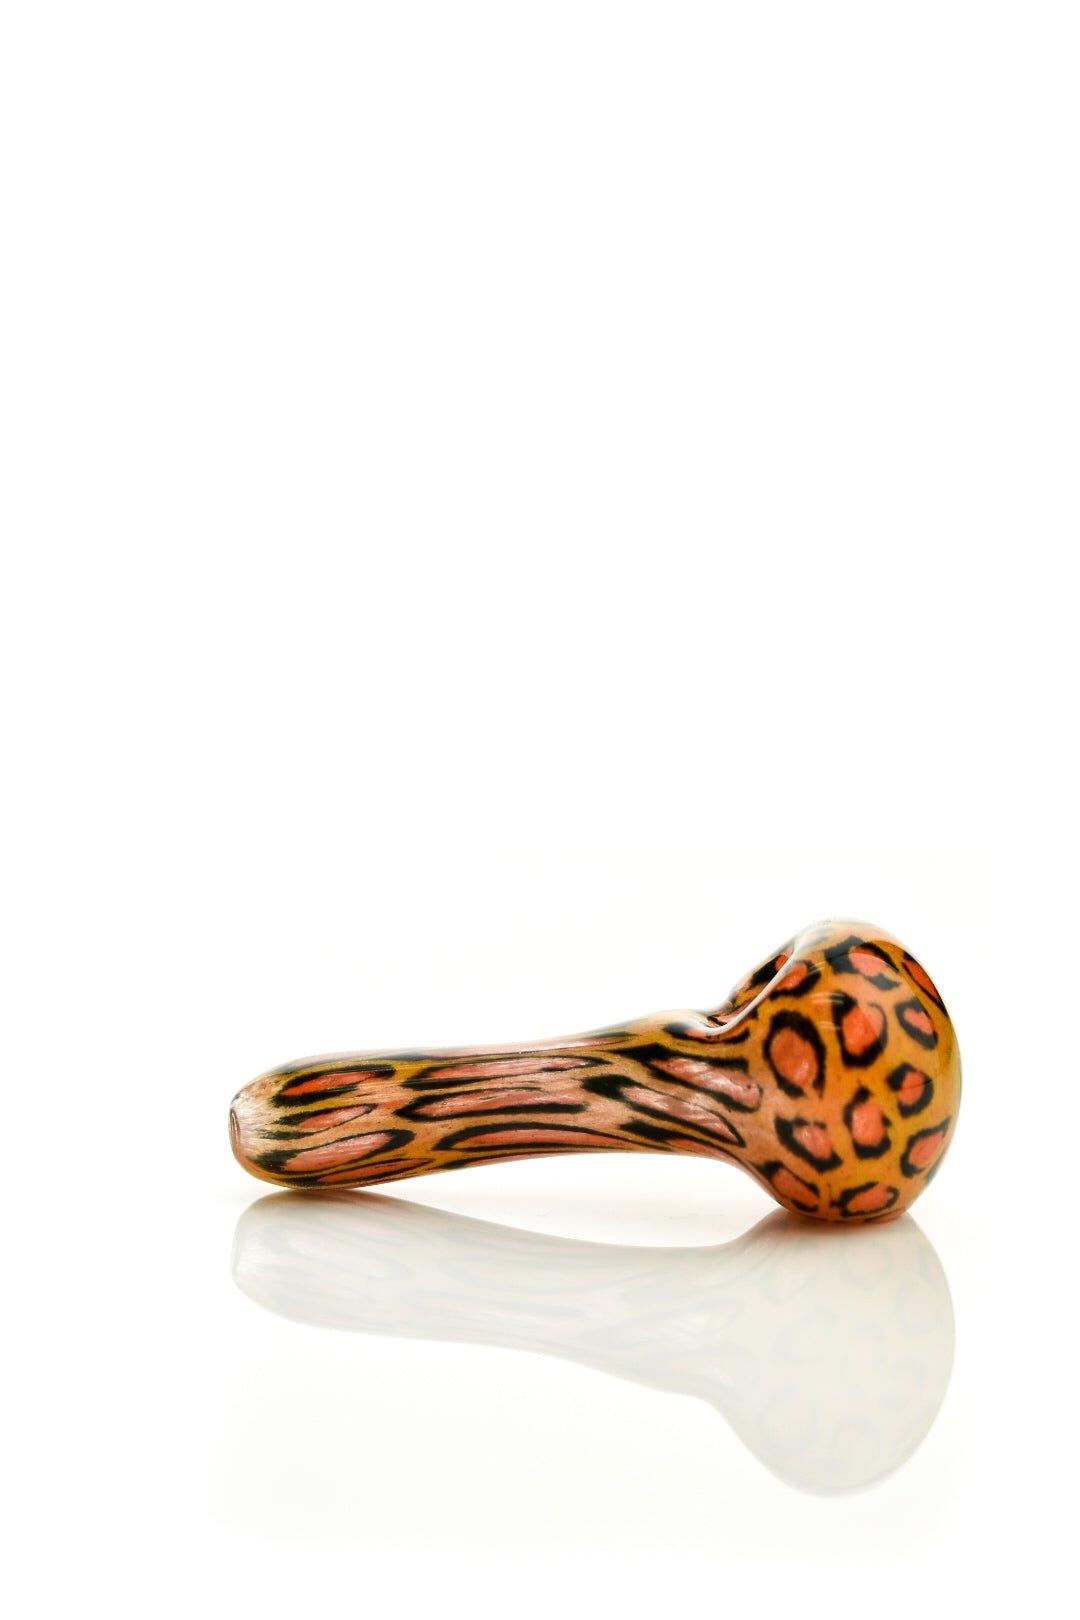 Hoffman glass leopard - Smoke Spot Smoke Shop